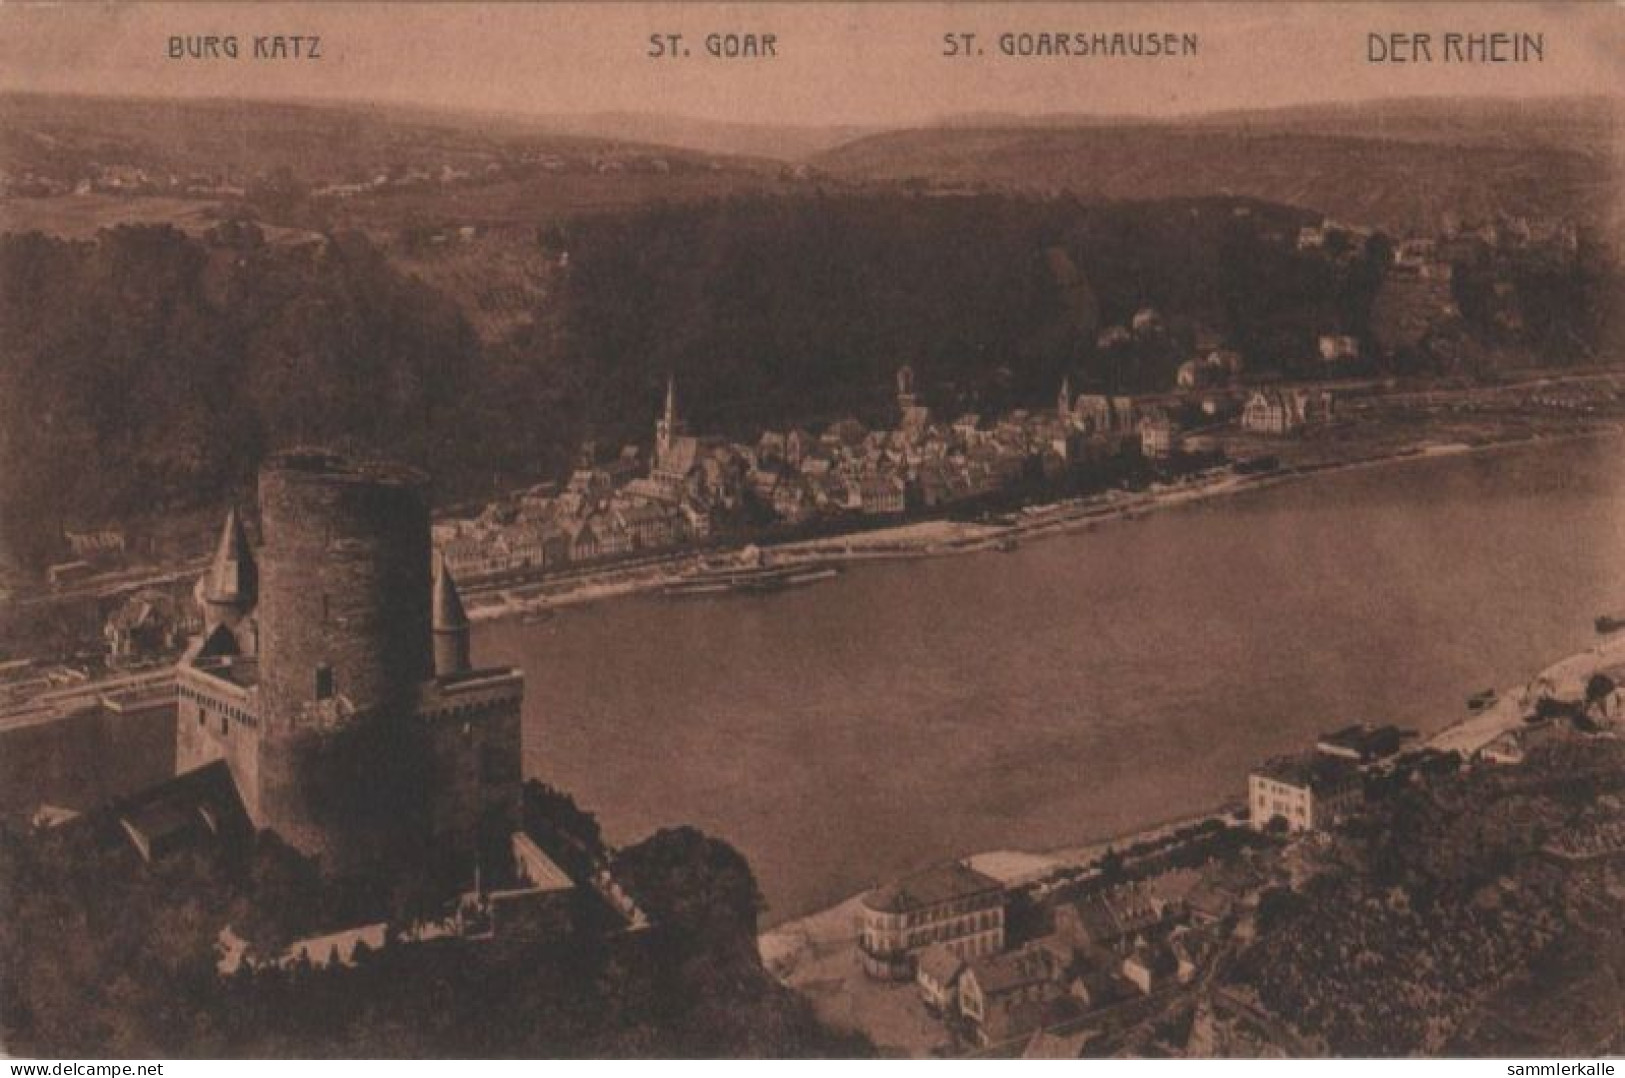 54150 - St. Goar - Mit Burg Katz - Ca. 1935 - St. Goar